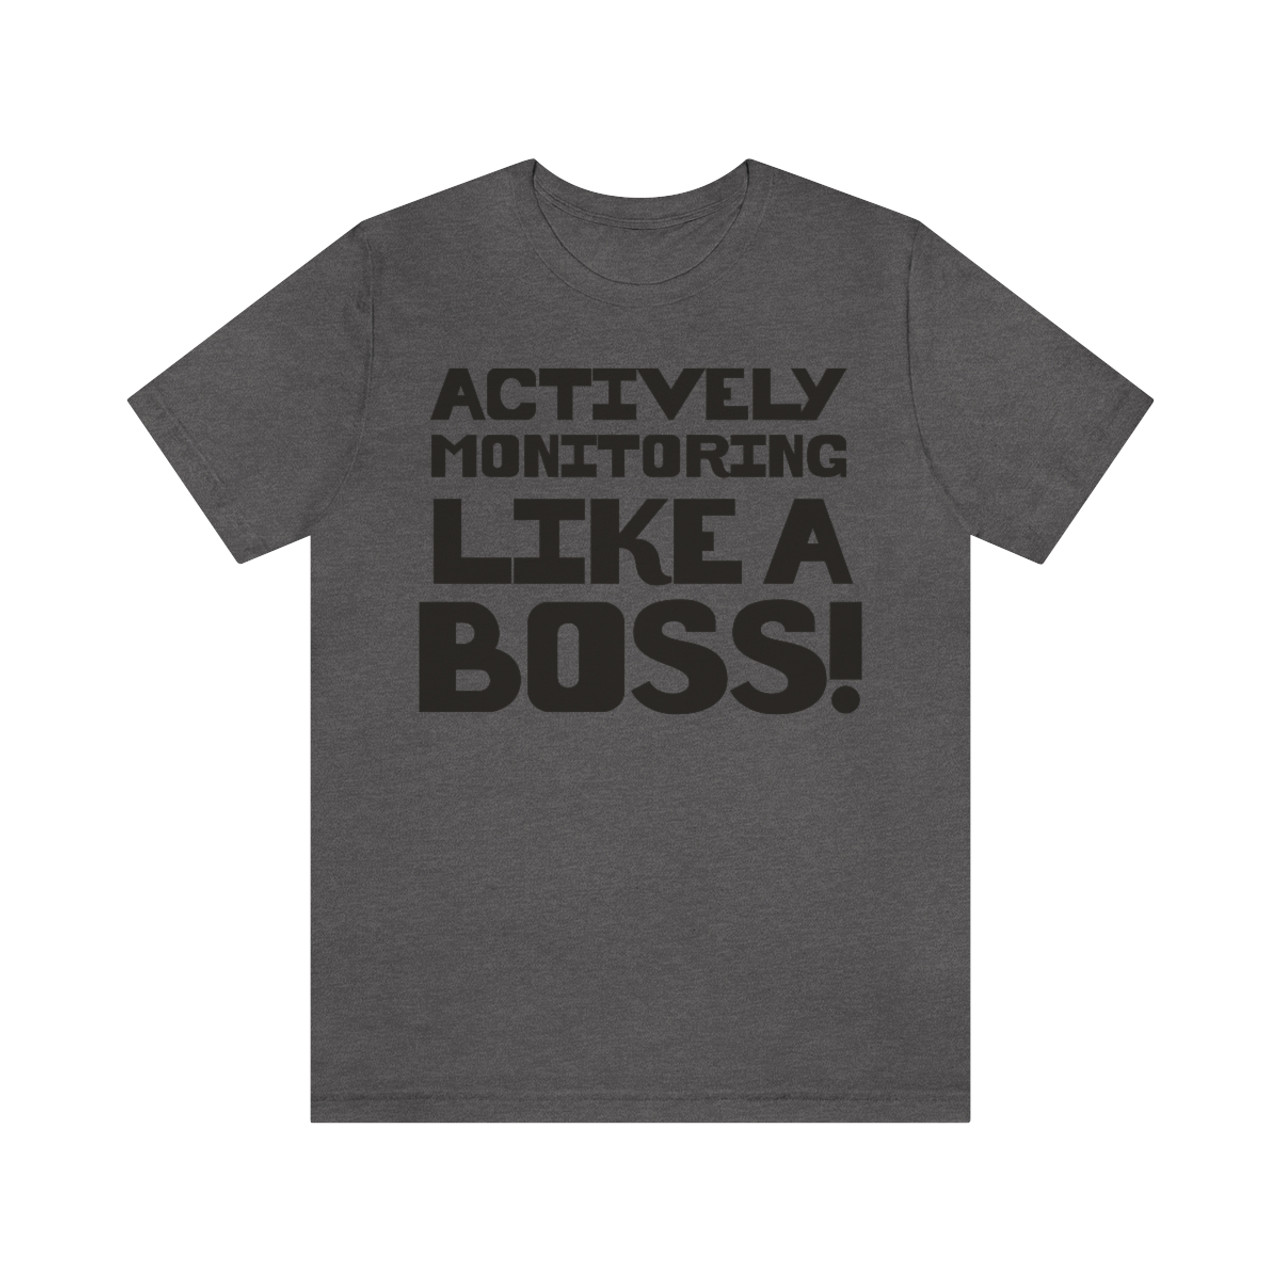 "Active Monitoring Like a Boss"